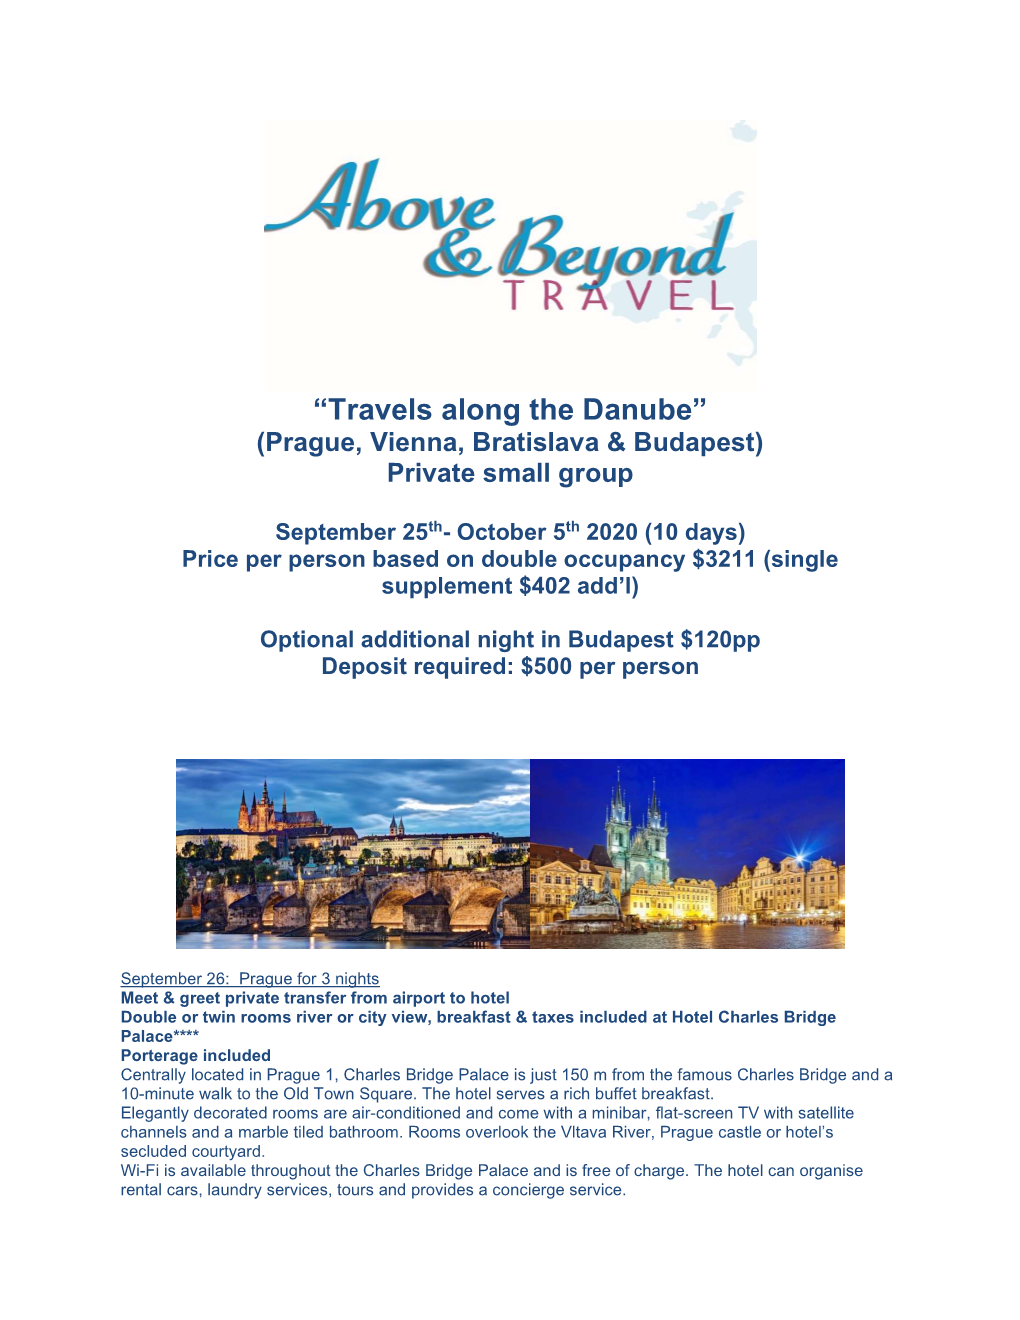 “Travels Along the Danube” (Prague, Vienna, Bratislava & Budapest) Private Small Group